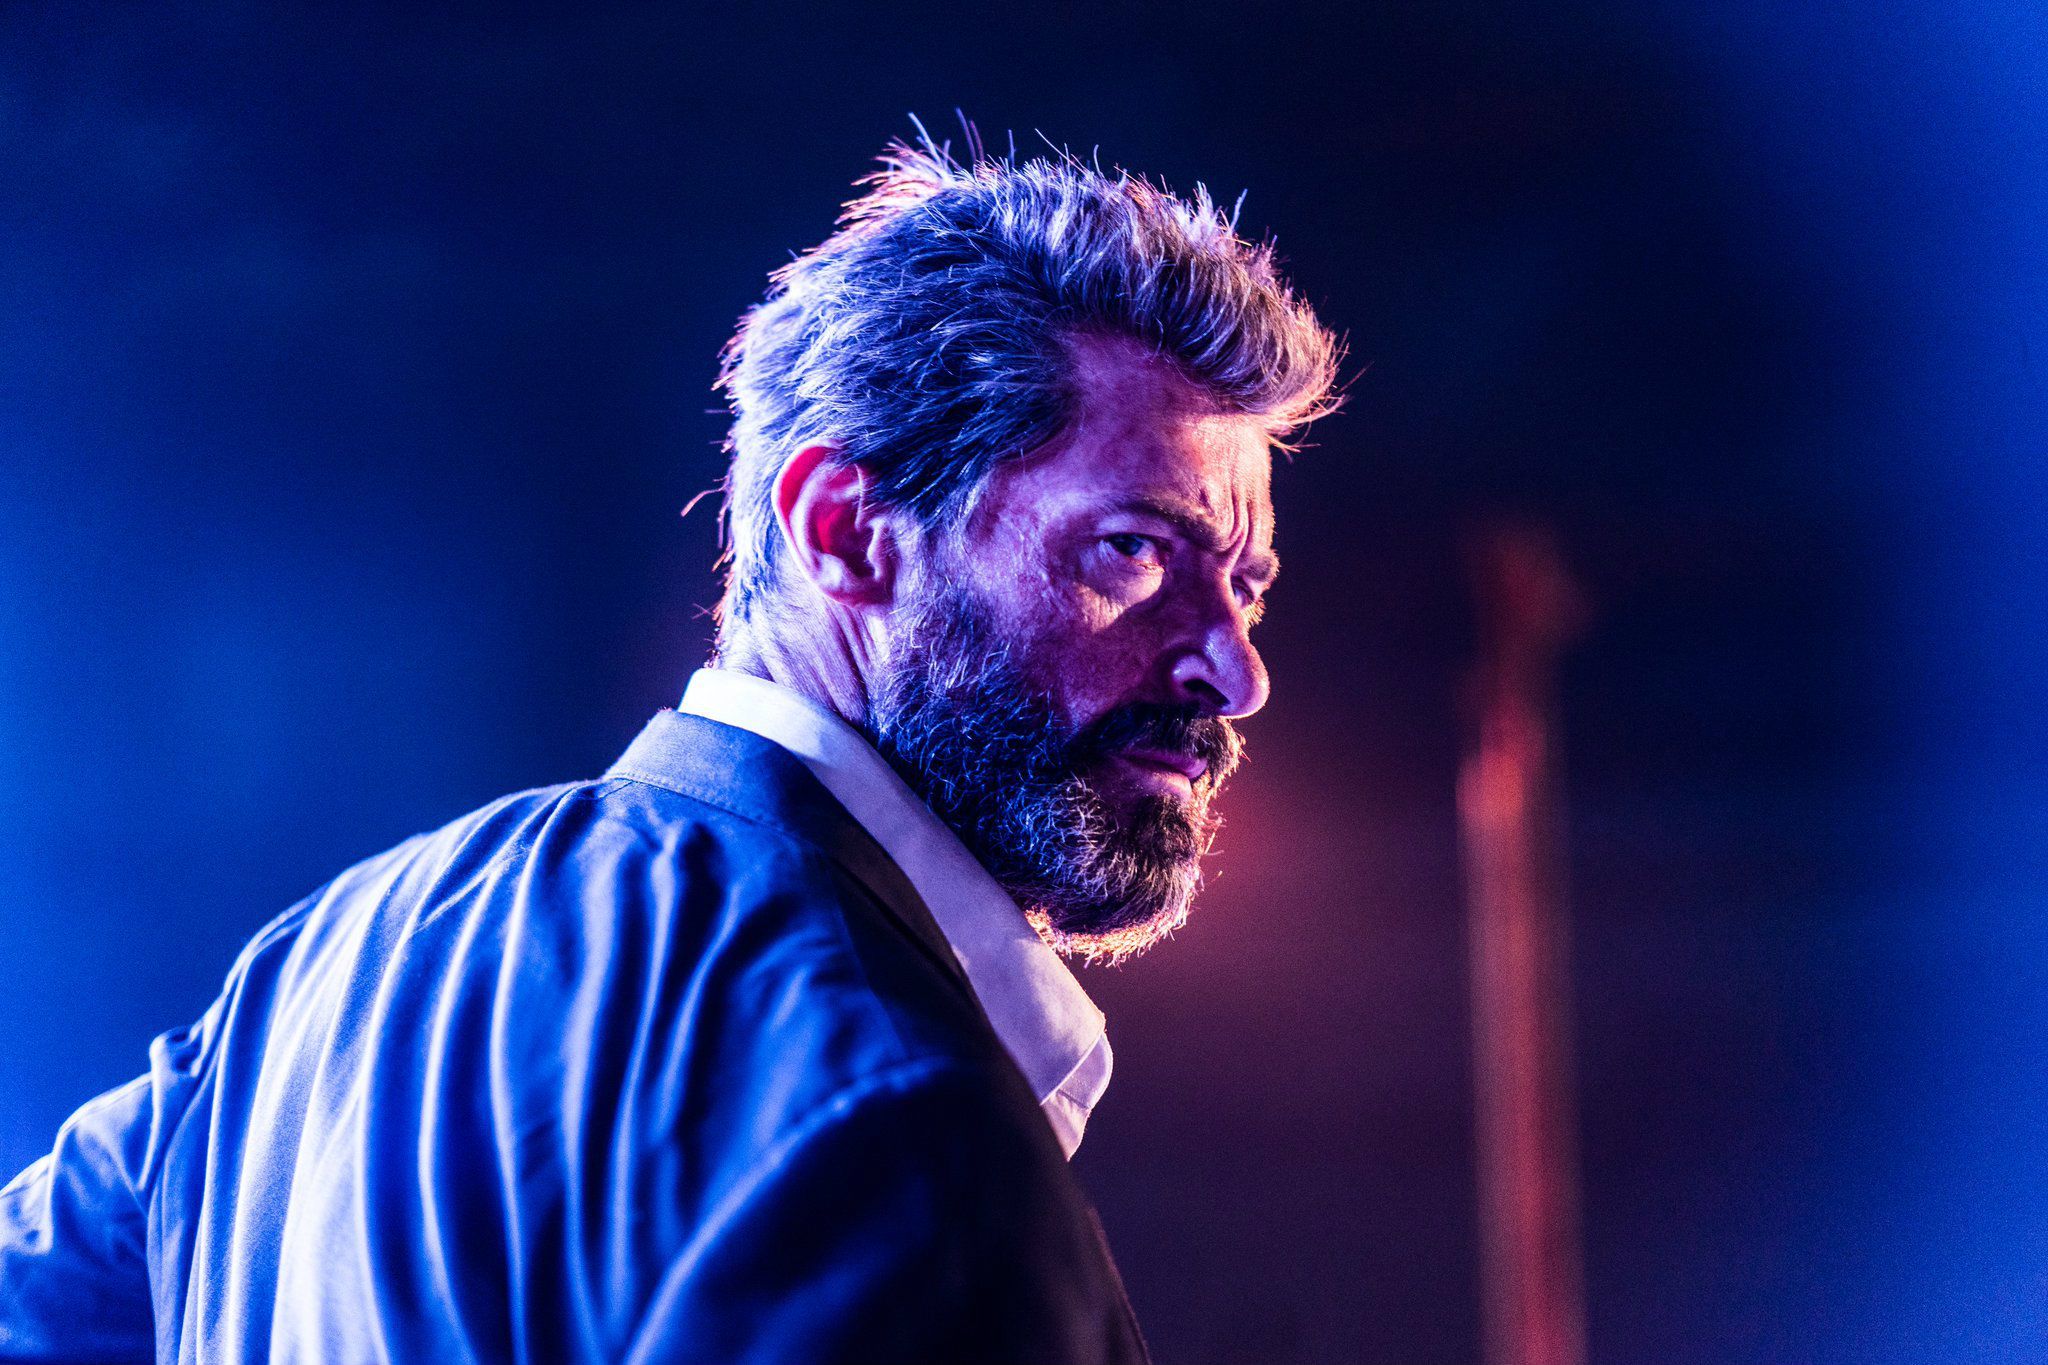 Logan - Hugh Jackman as Wolverine